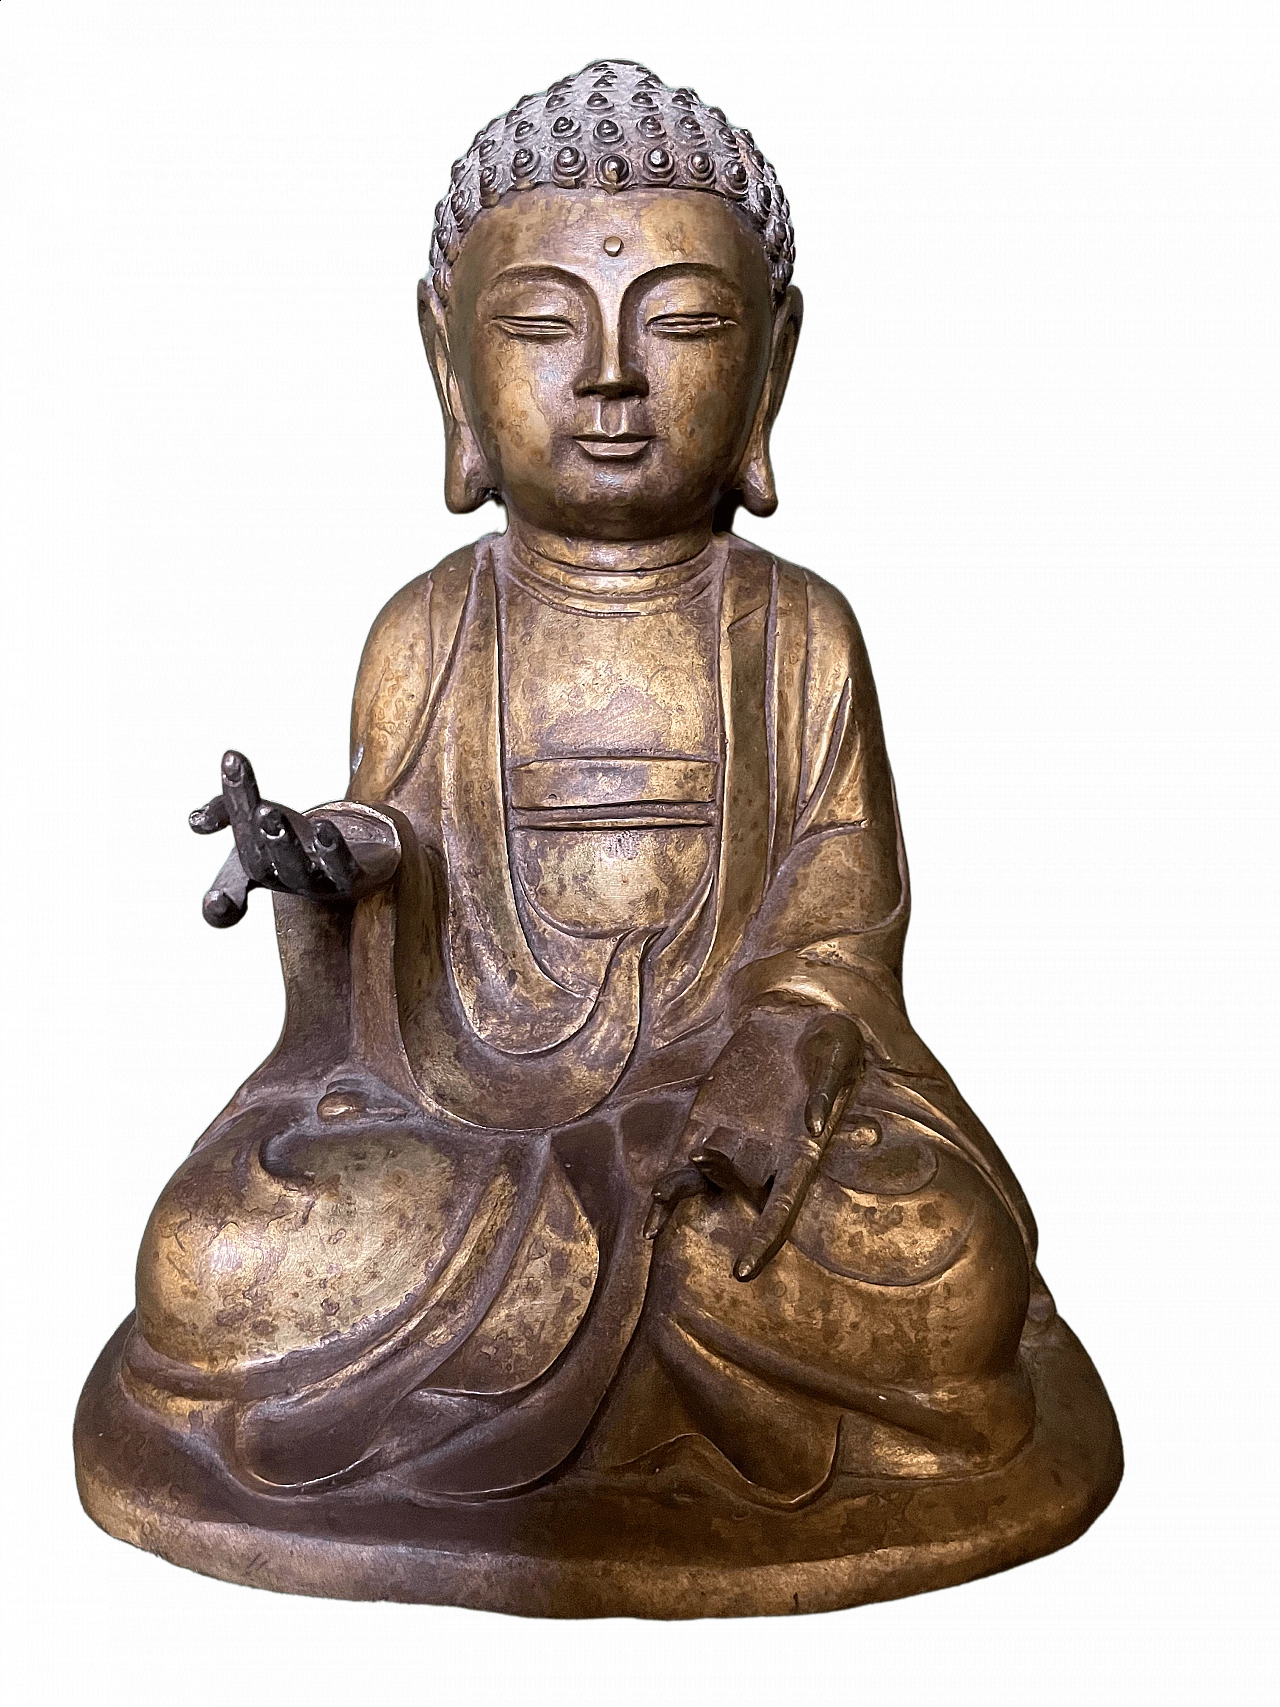 Seated bronze Buddha sculpture, 19th century 1480848